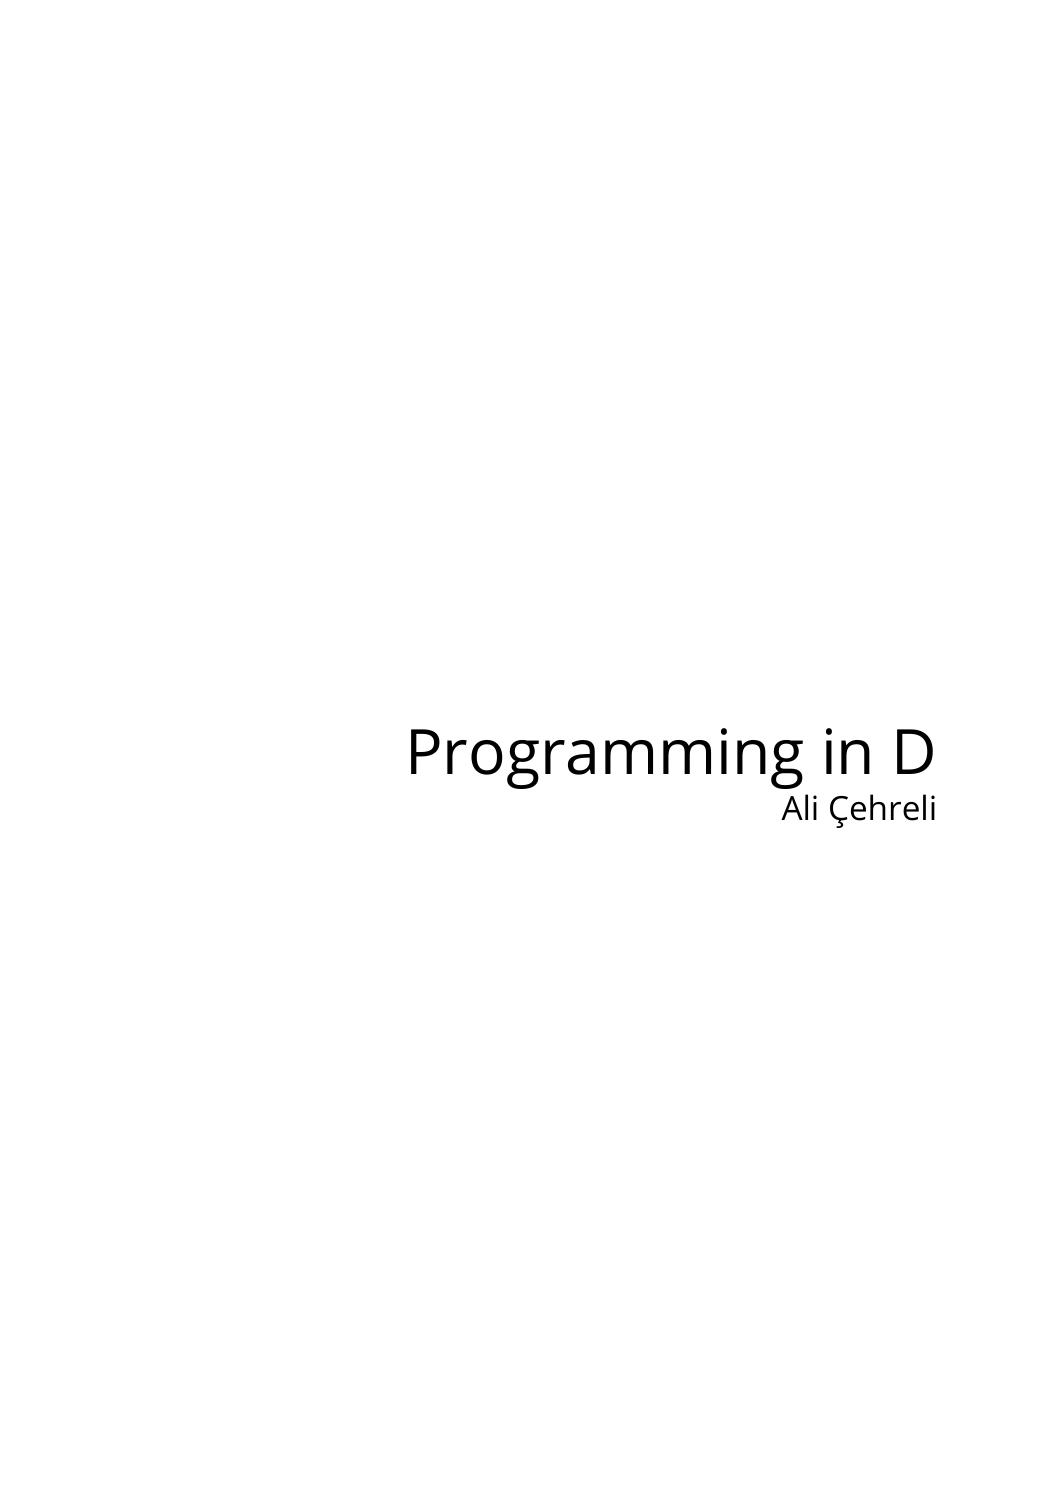 Programming in D by Ali Çehreli